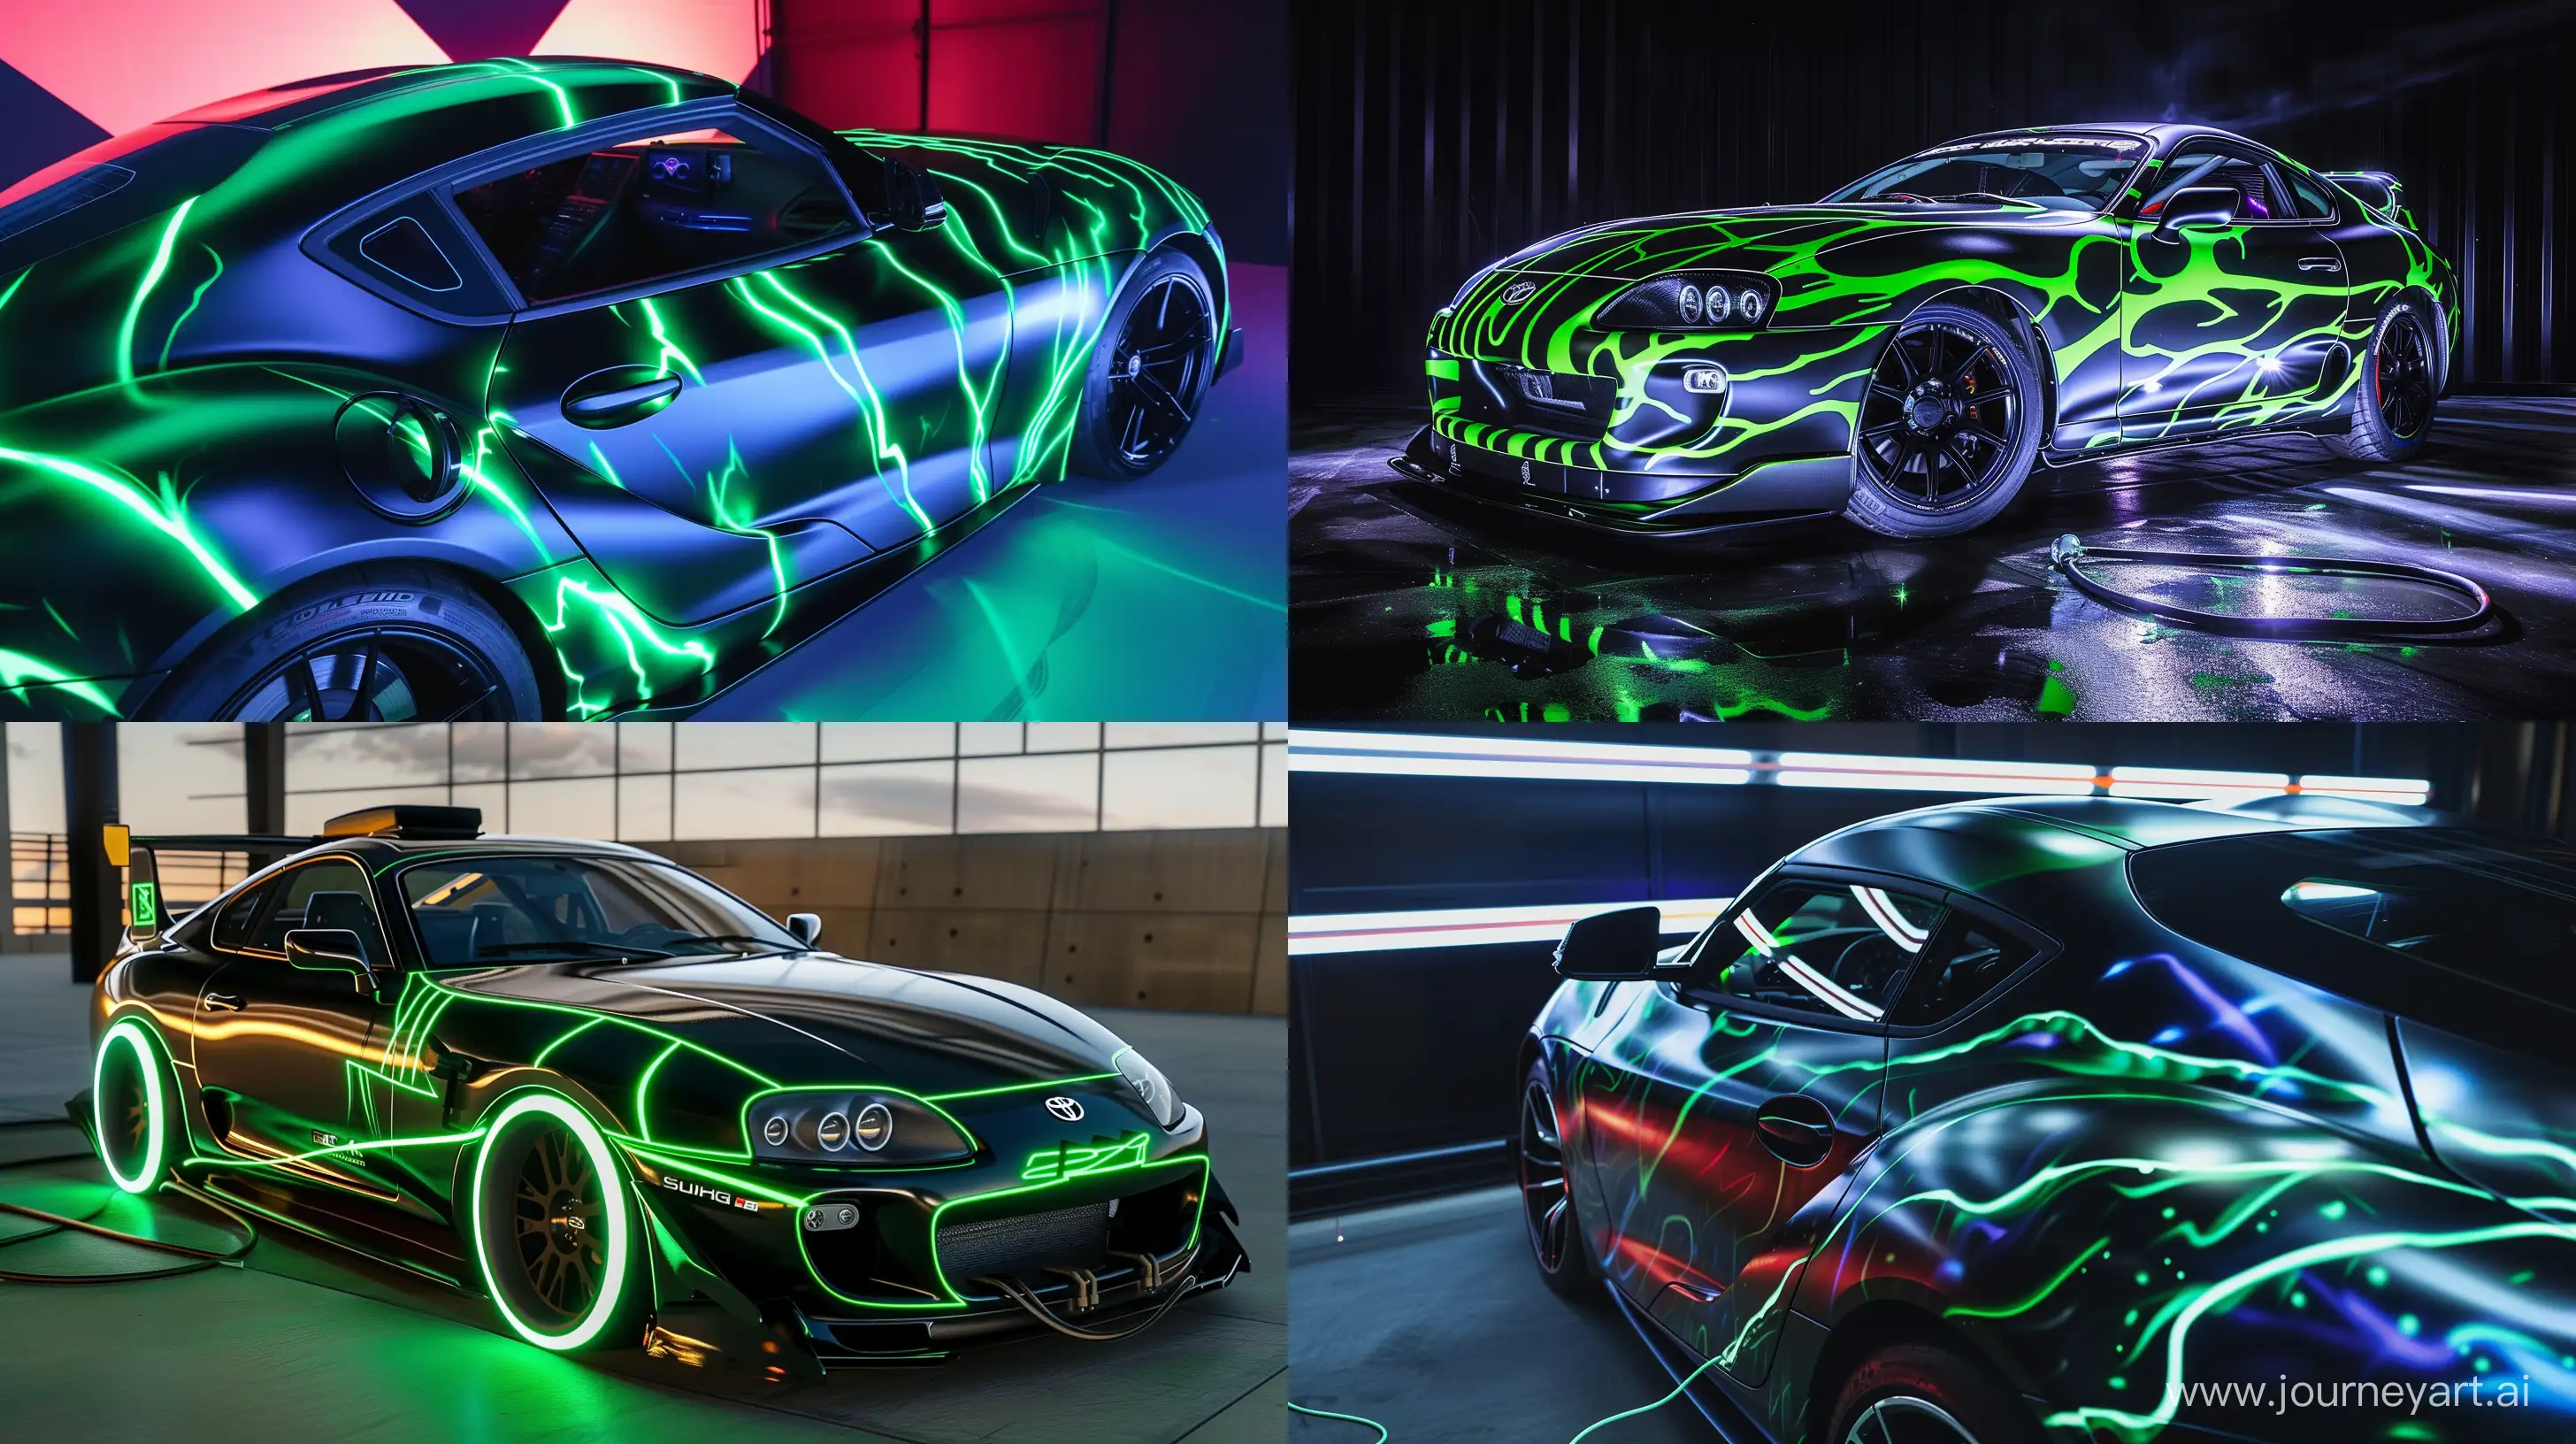 Vibrant-Black-and-Green-Electric-Power-Illuminating-Supra-MK4-Car